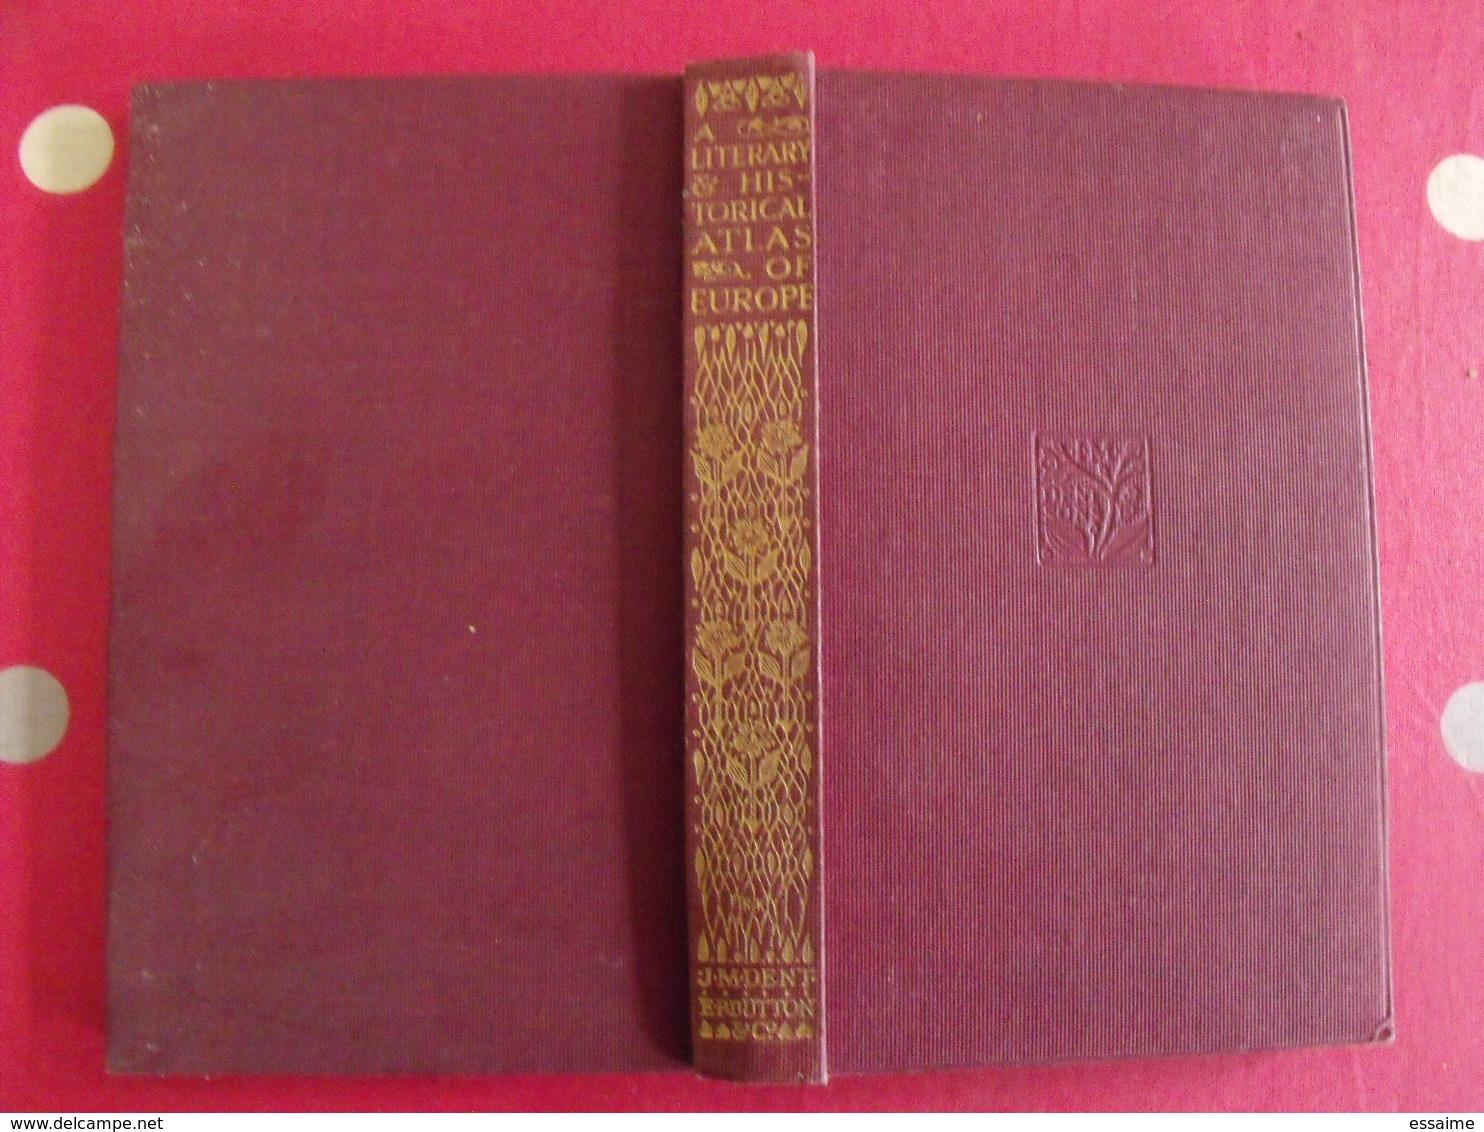 A Literary & Historical Atlas Of Europe; Bartholomew. Dent, London, 1912 - Europe